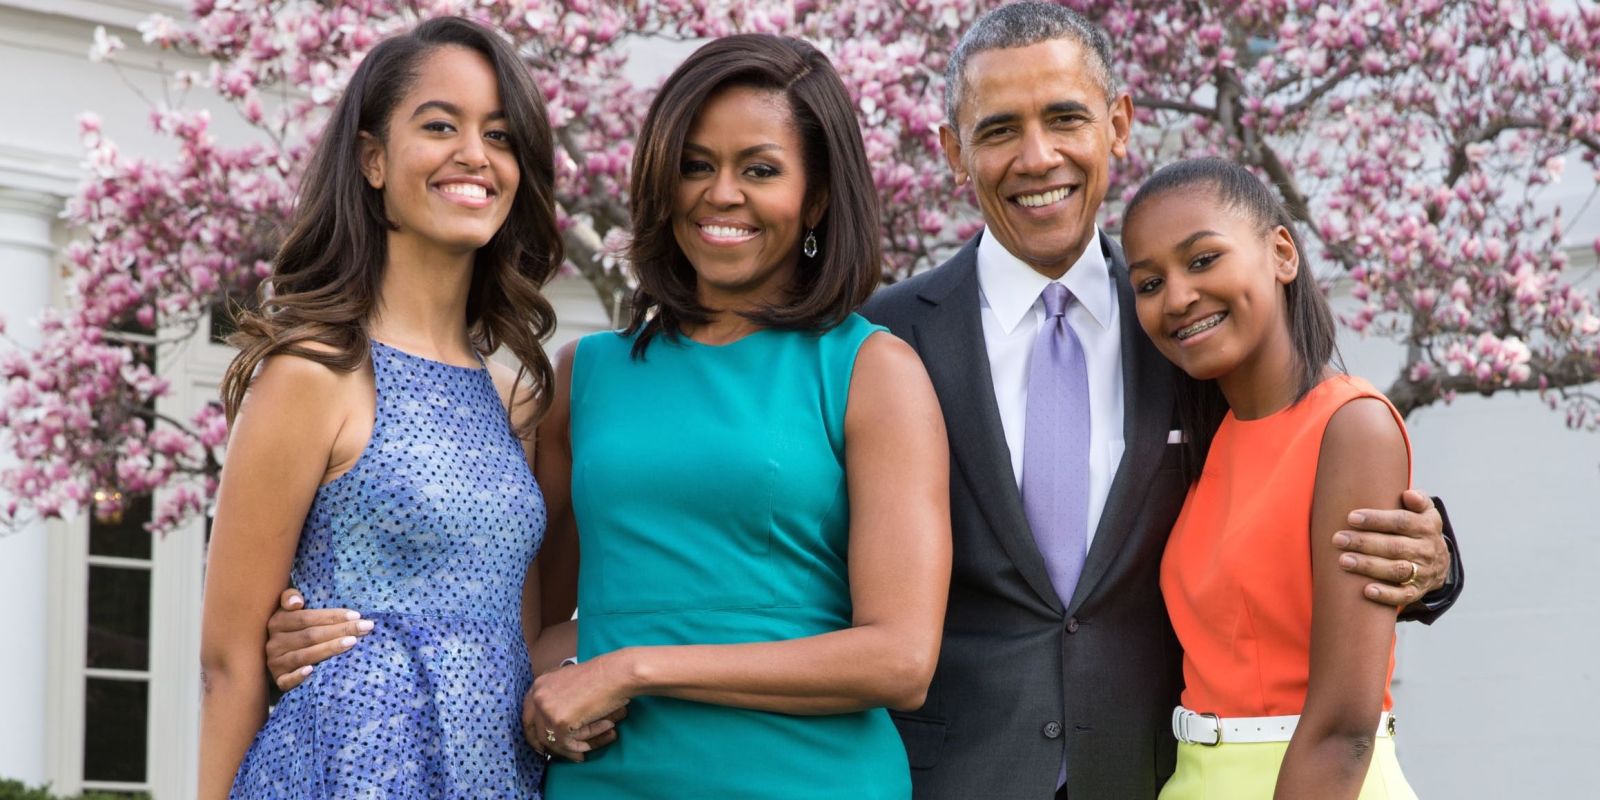 Intip bakal rumah keluarga Obama setelah pindah dari White House, yuk!